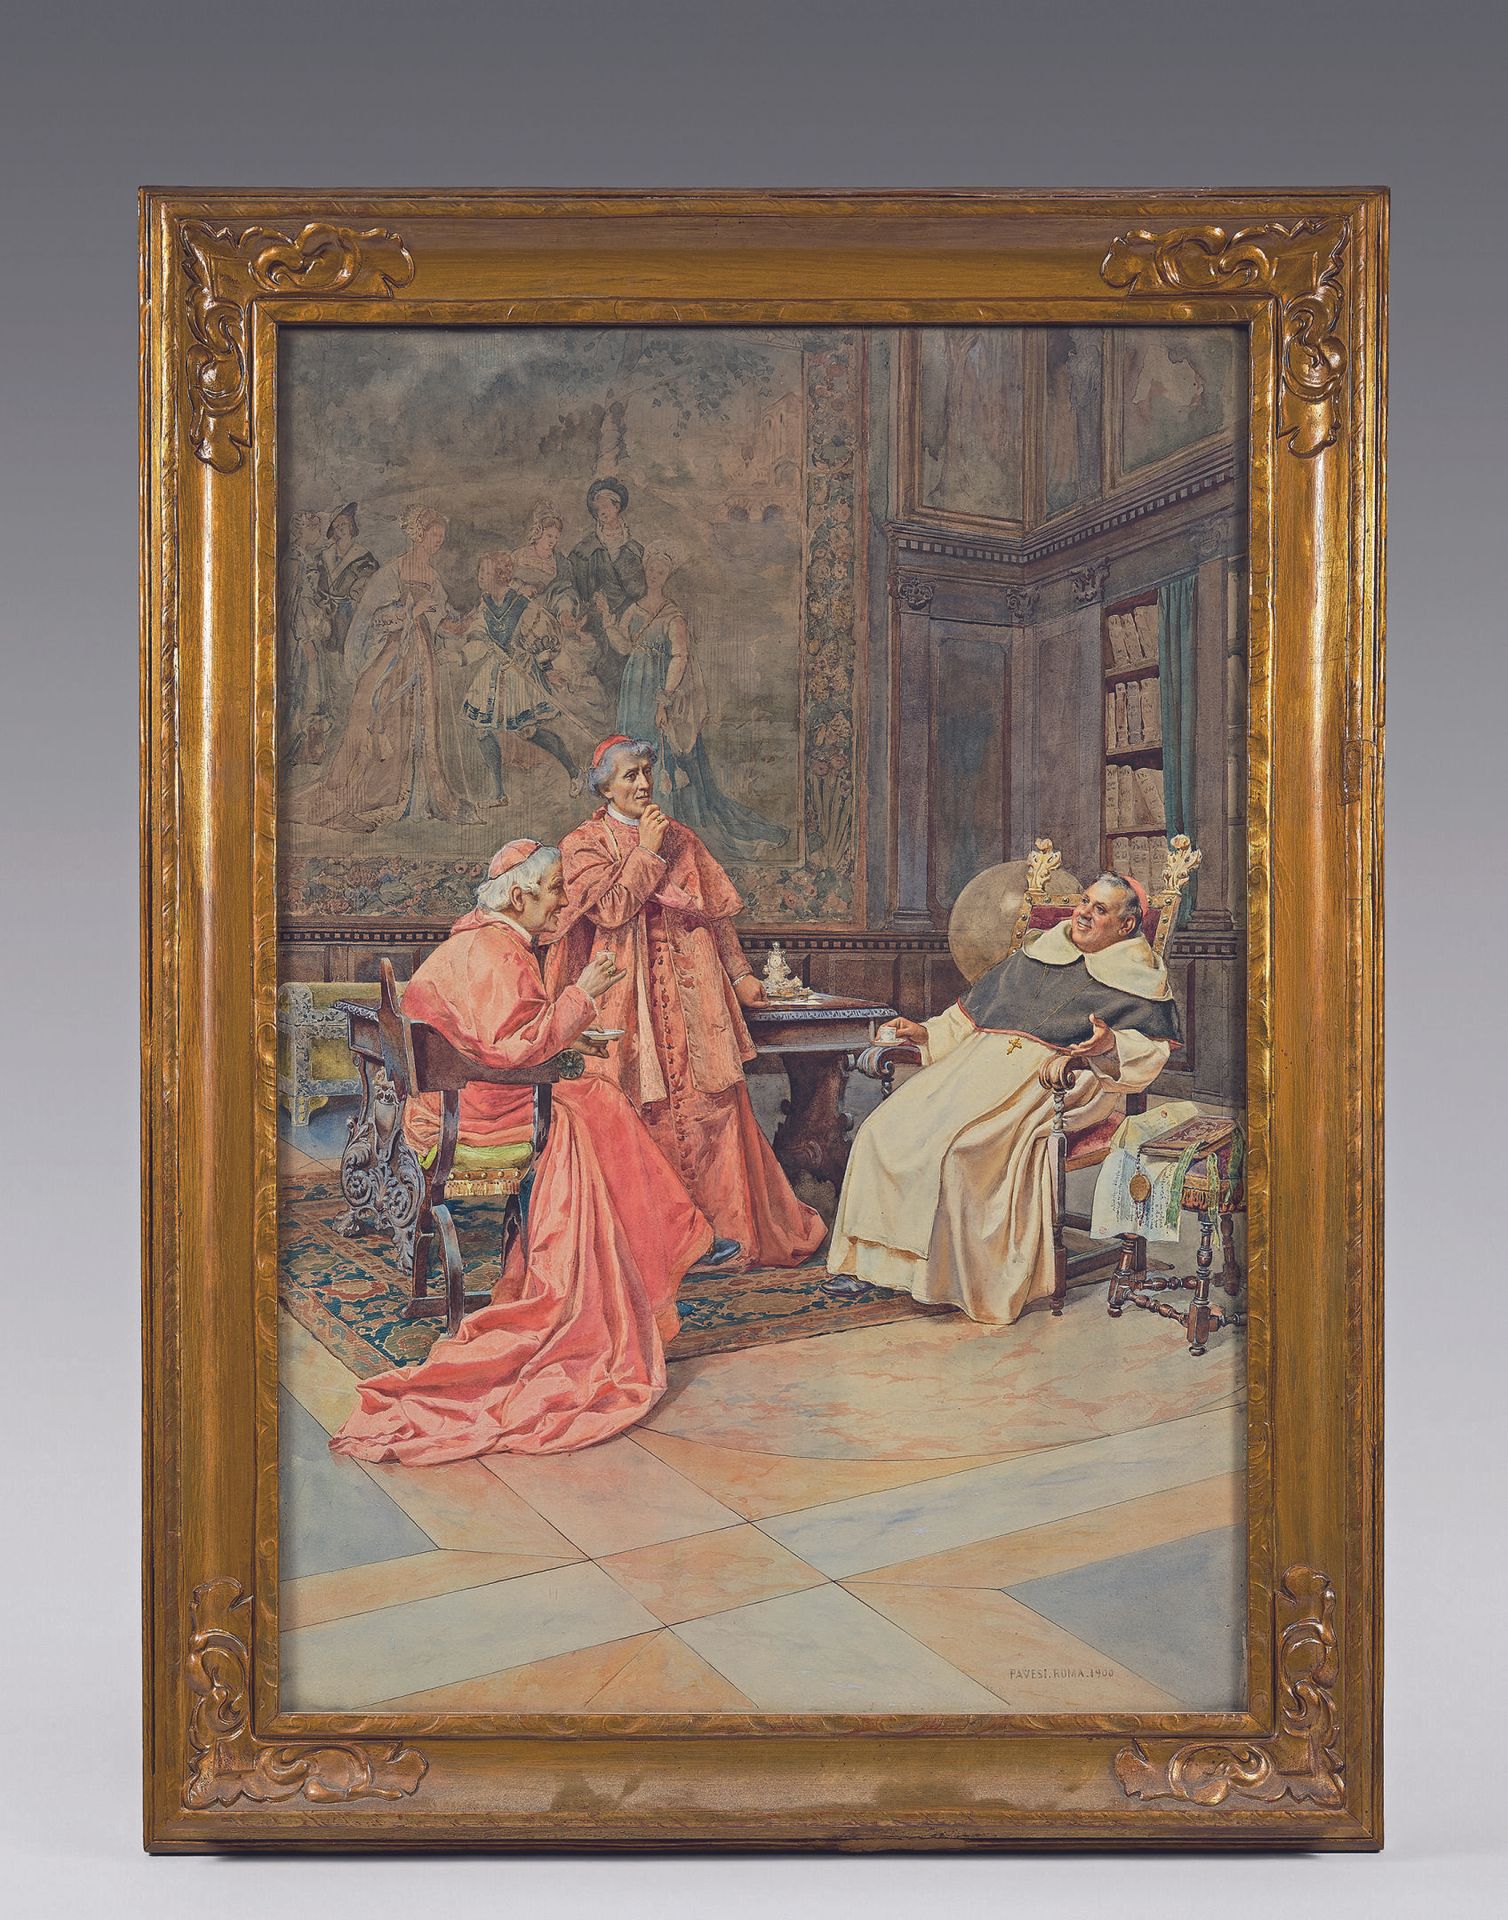 Null 皮特罗-帕维西 (1844-1907)
茶水时间，1900年
水彩画，右下方有签名、日期和位置 "Roma"。
74 x 51 厘米